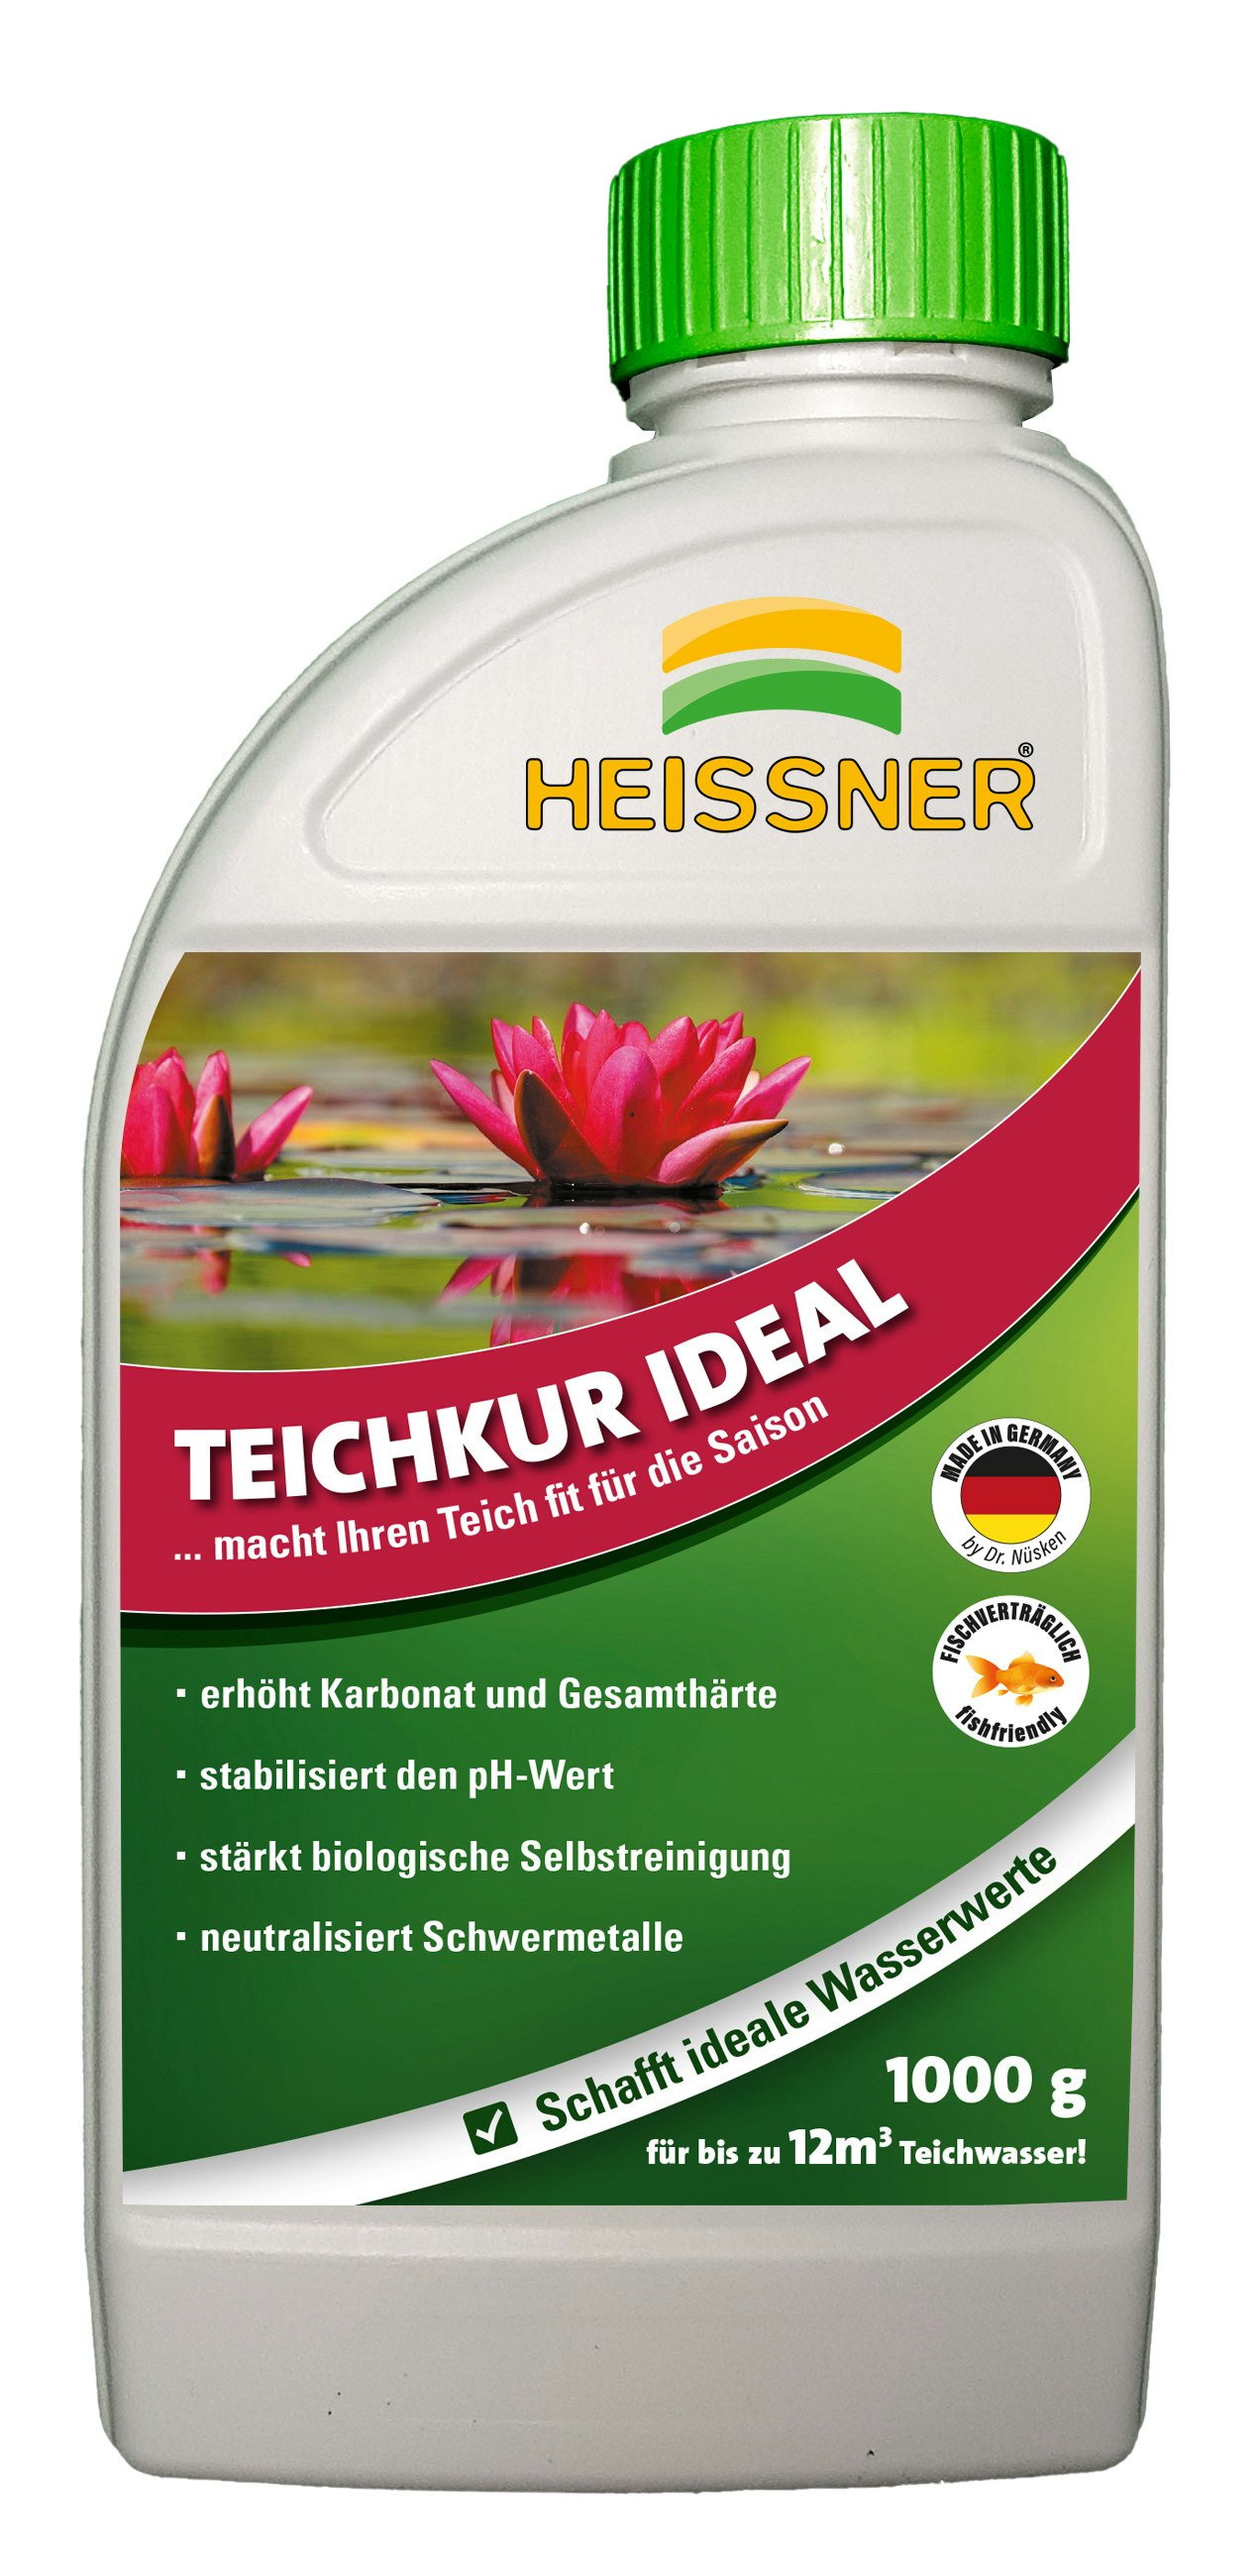 Heissner Teichpflege "TEICHKUR IDEAL", 1000g